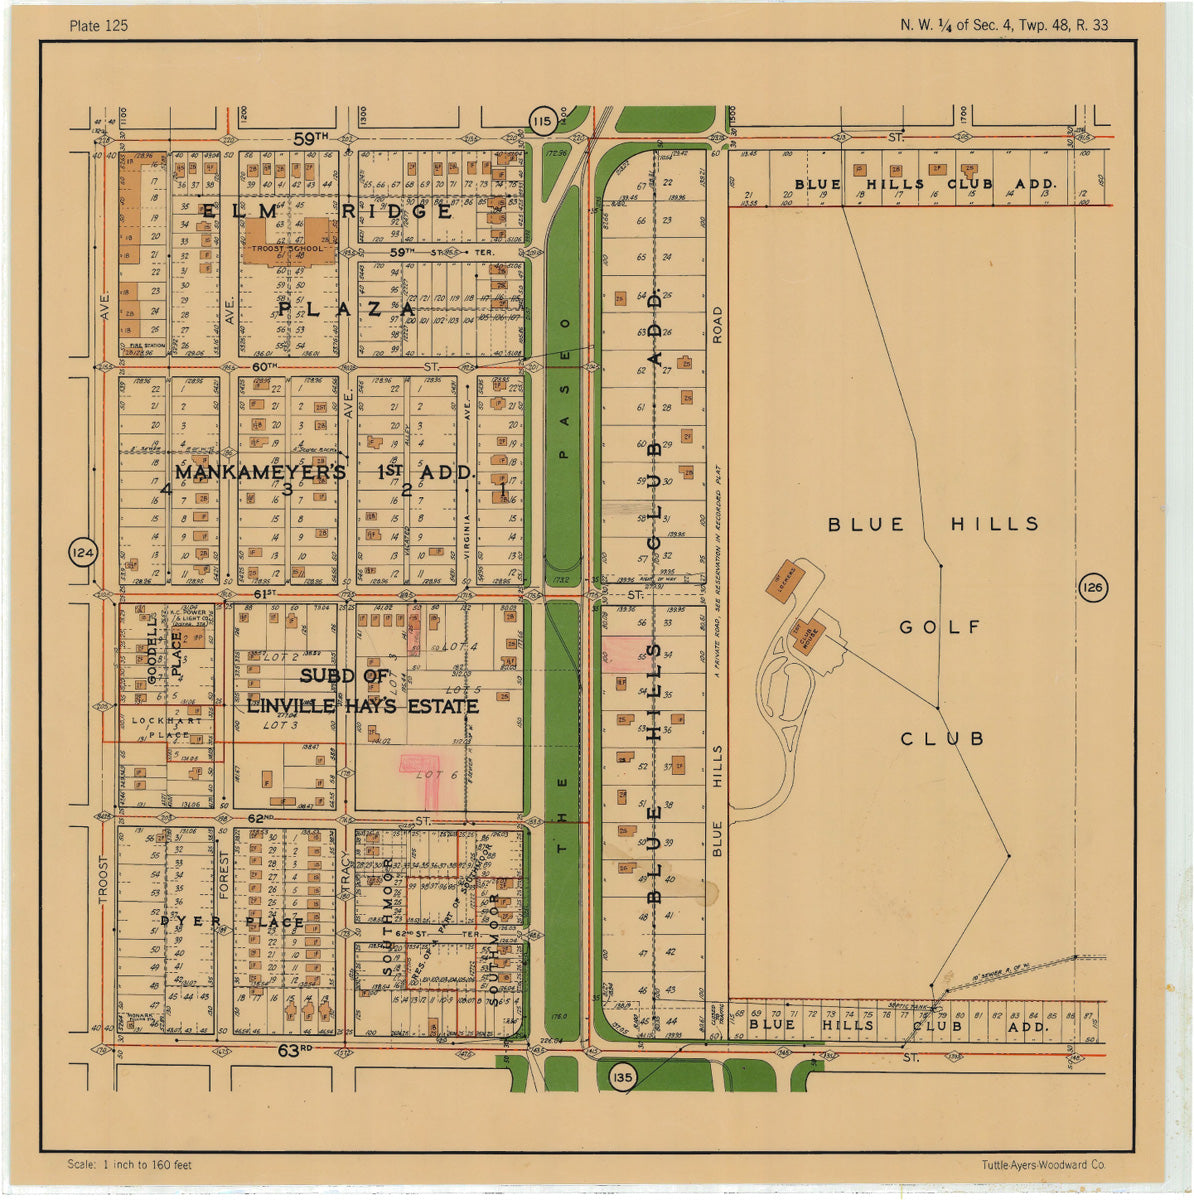 Kansas City 1925 Neighborhood Map - Plate #125 59th-63rd Troost-Blue Hills